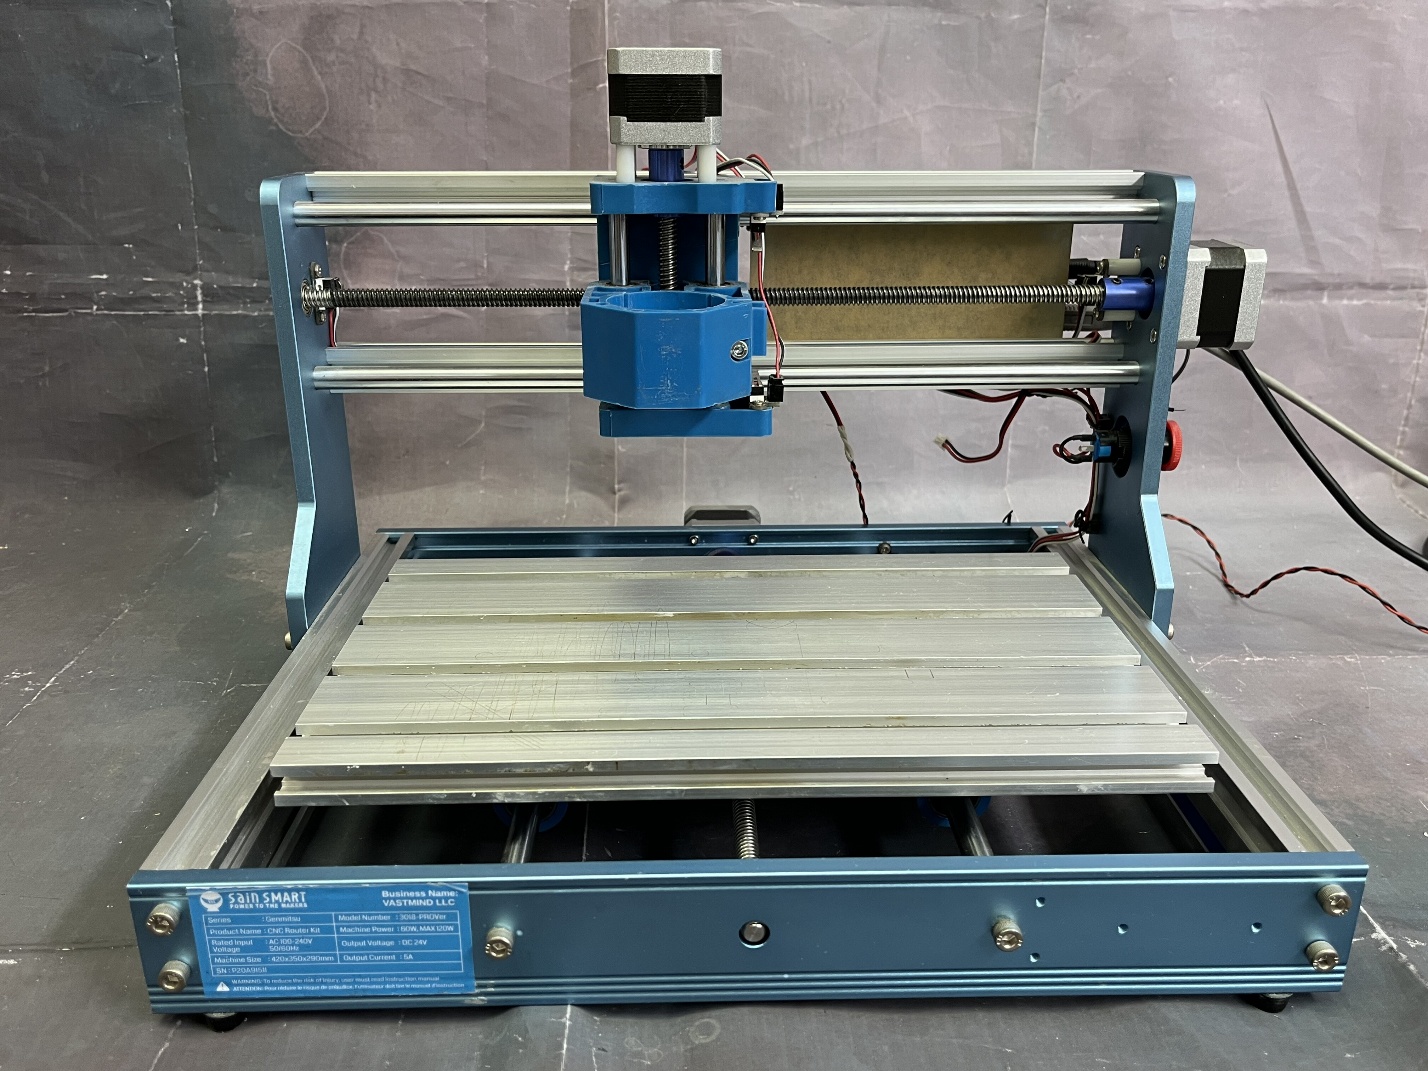 30 / 50 watt fiber laser sources for your 3D printer / CNC or engravin –  Endurance Lasers